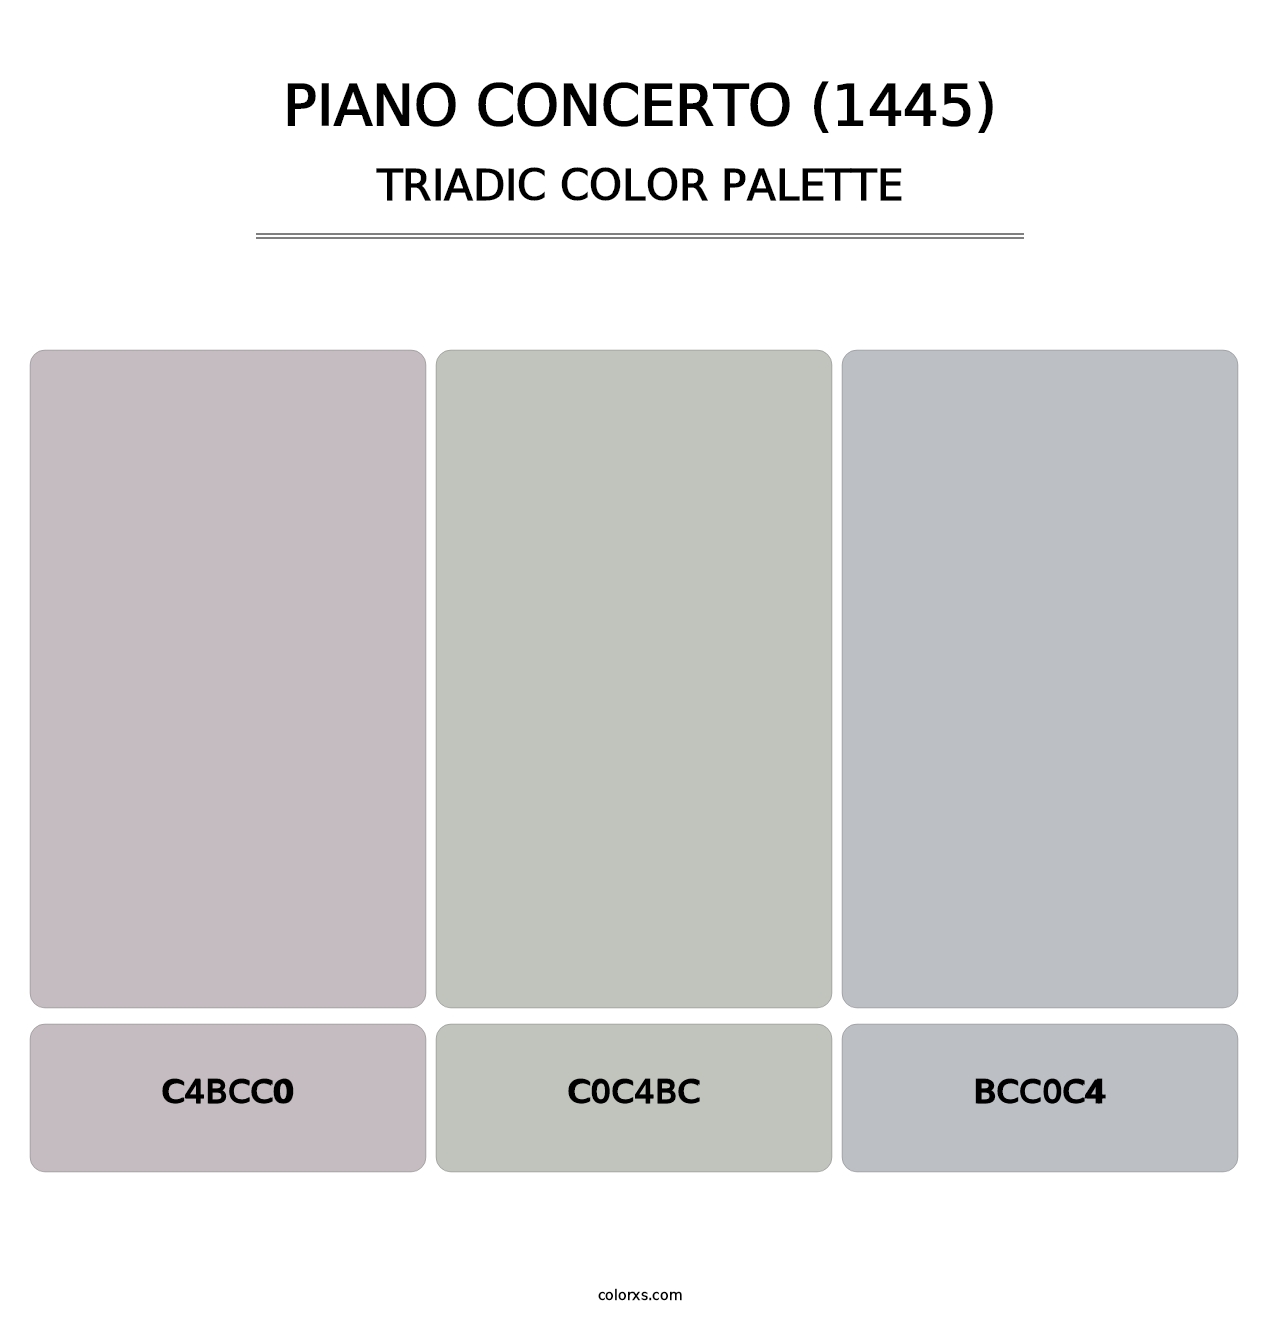 Piano Concerto (1445) - Triadic Color Palette